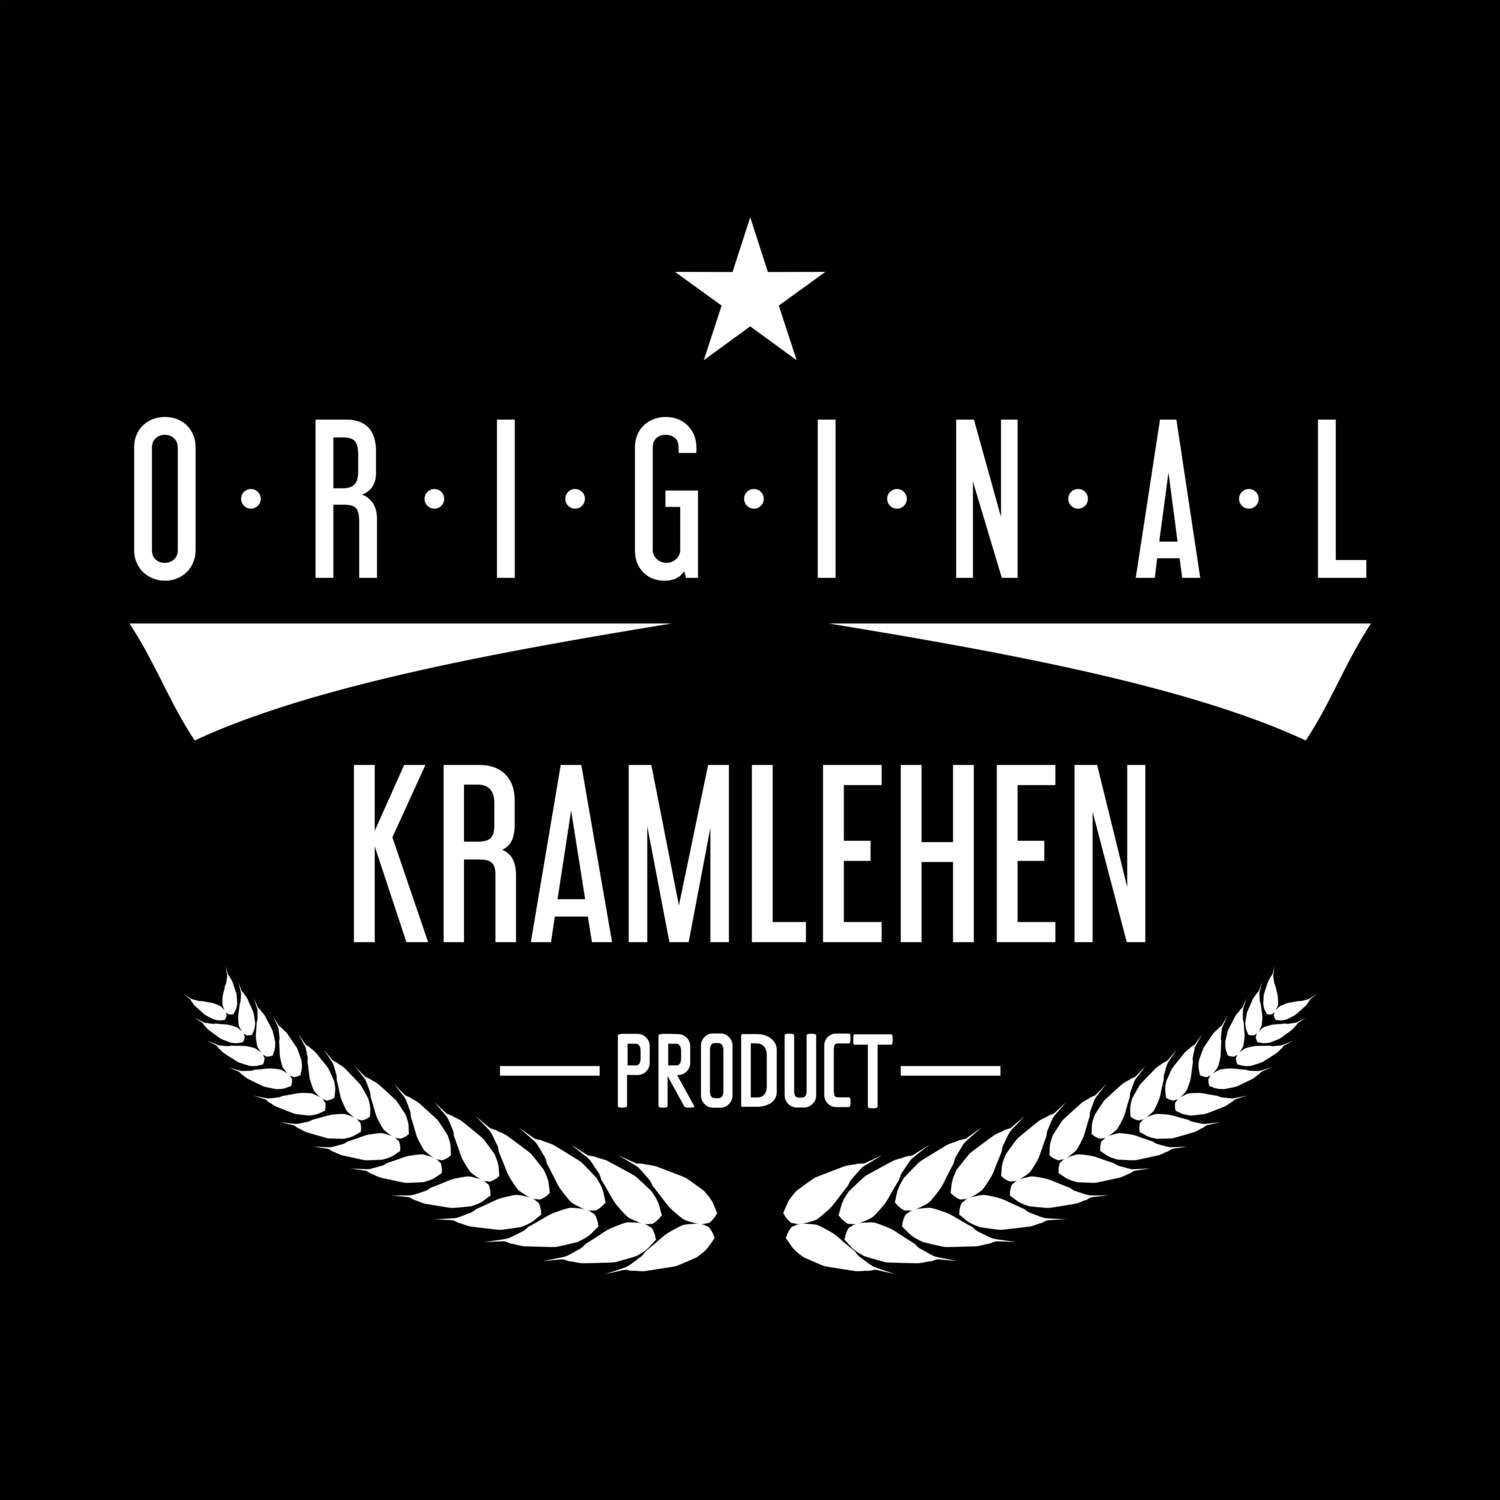 Kramlehen T-Shirt »Original Product«